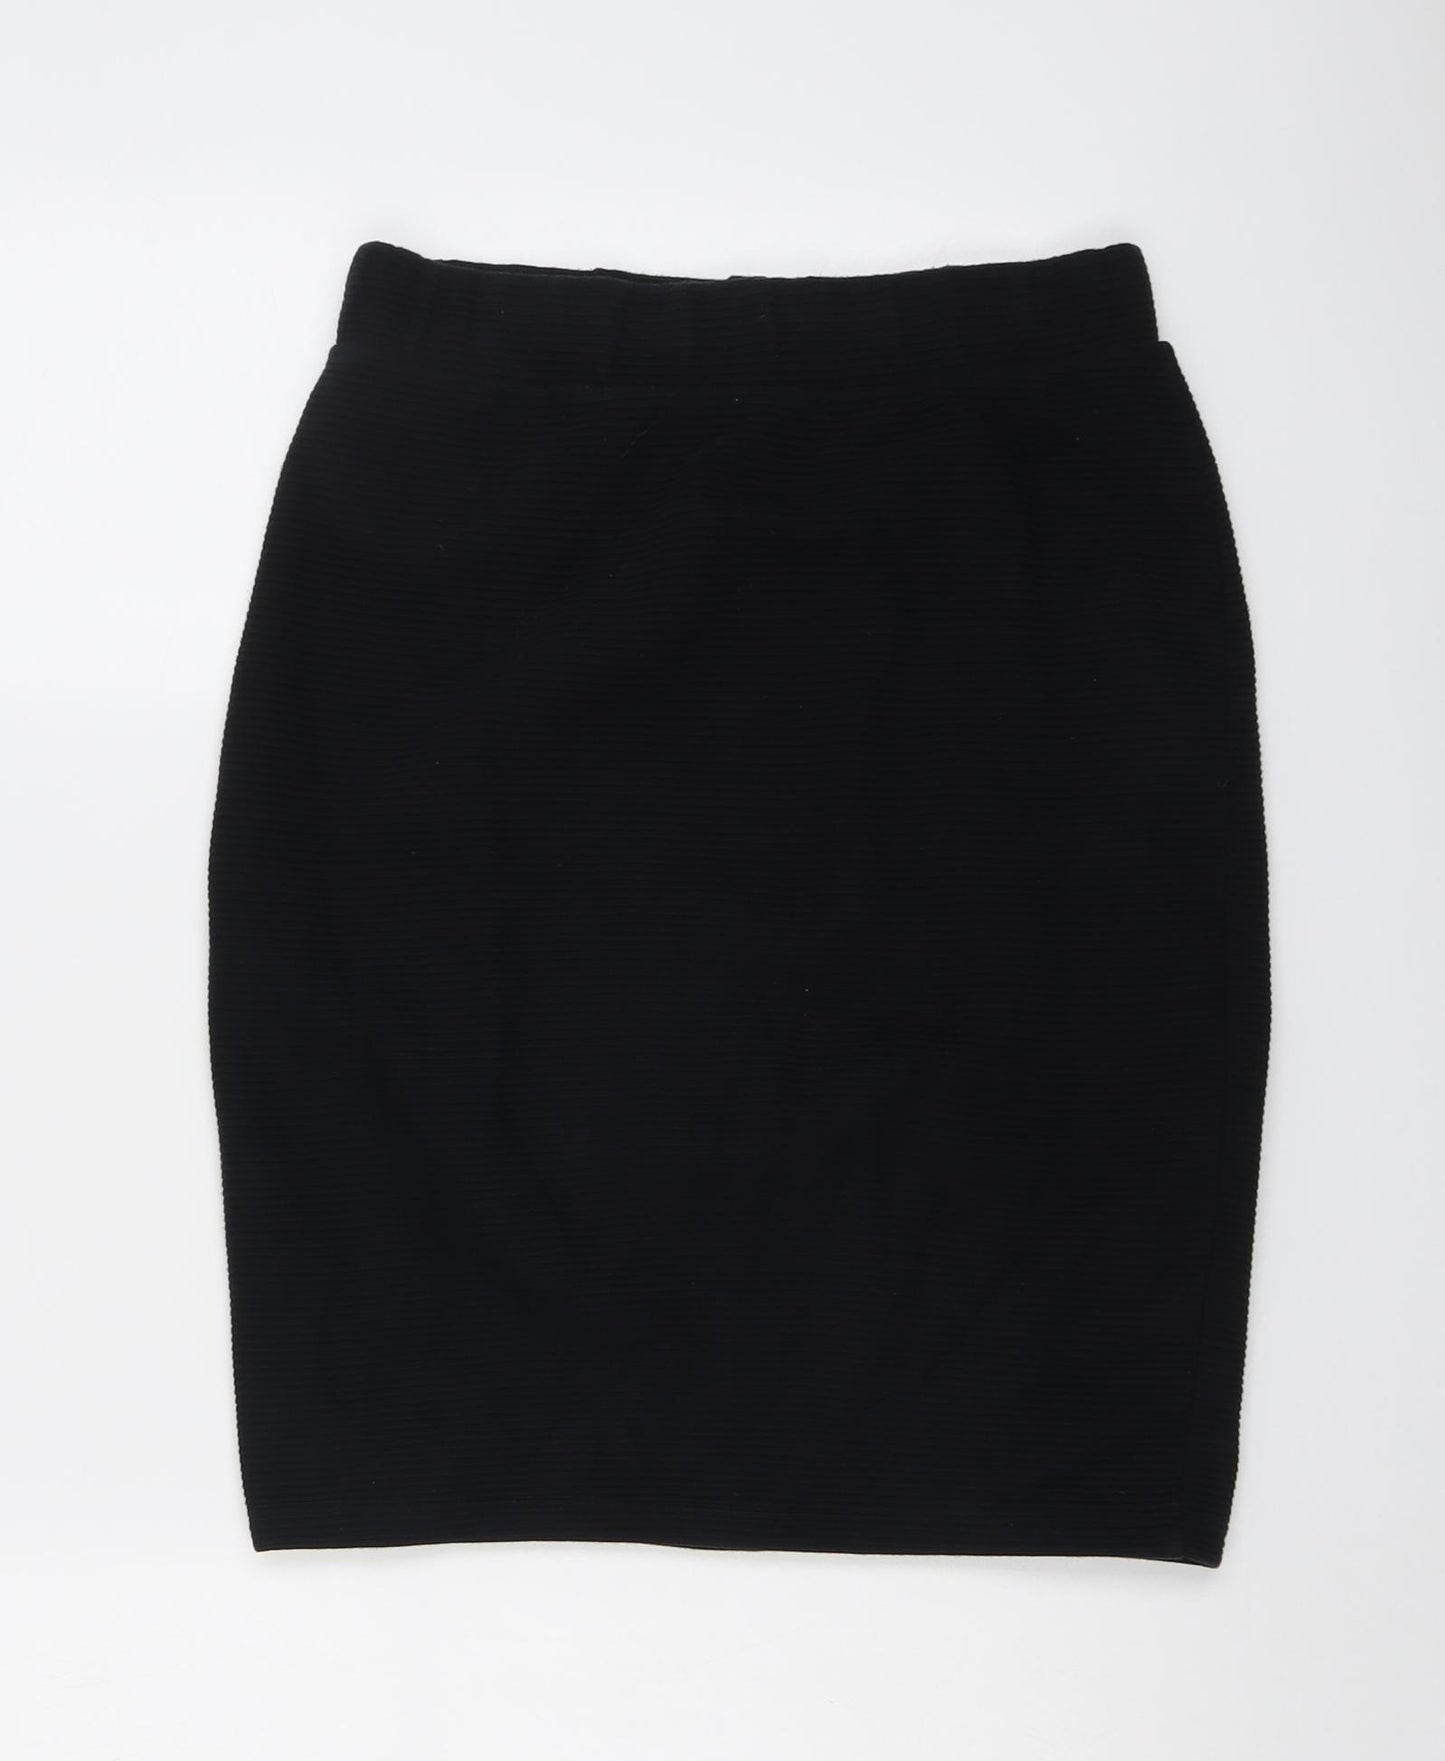 NEXT Womens Black Cotton Bandage Skirt Size 10